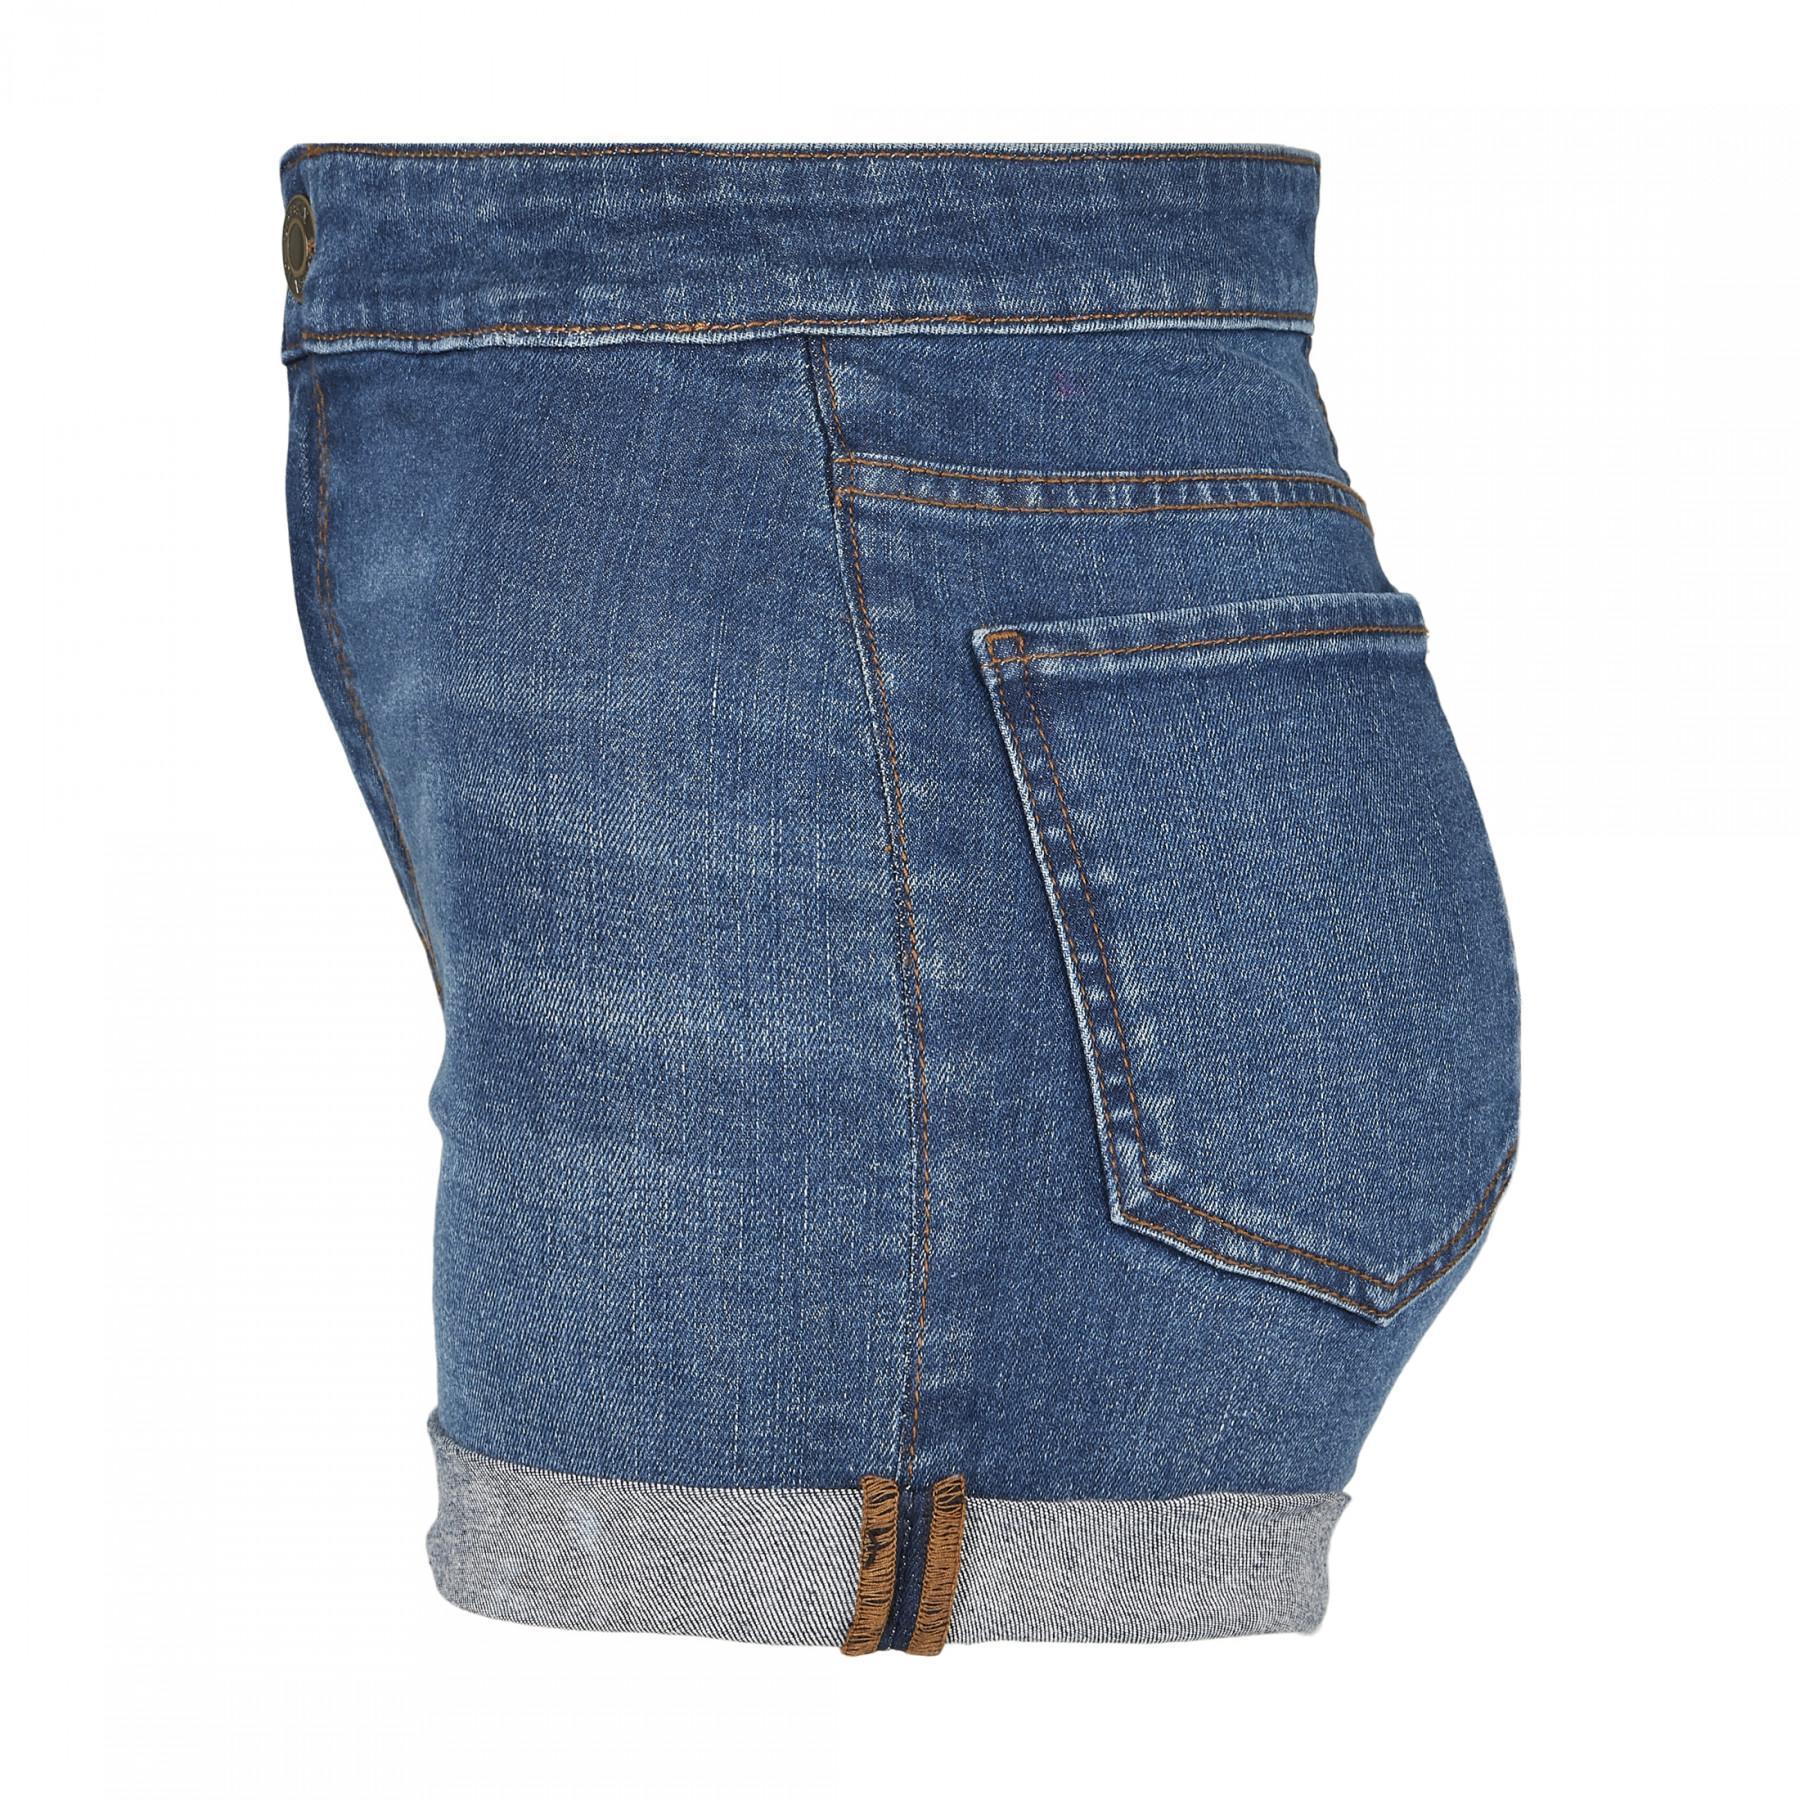 Women's Urban Classic pocket slim shorts